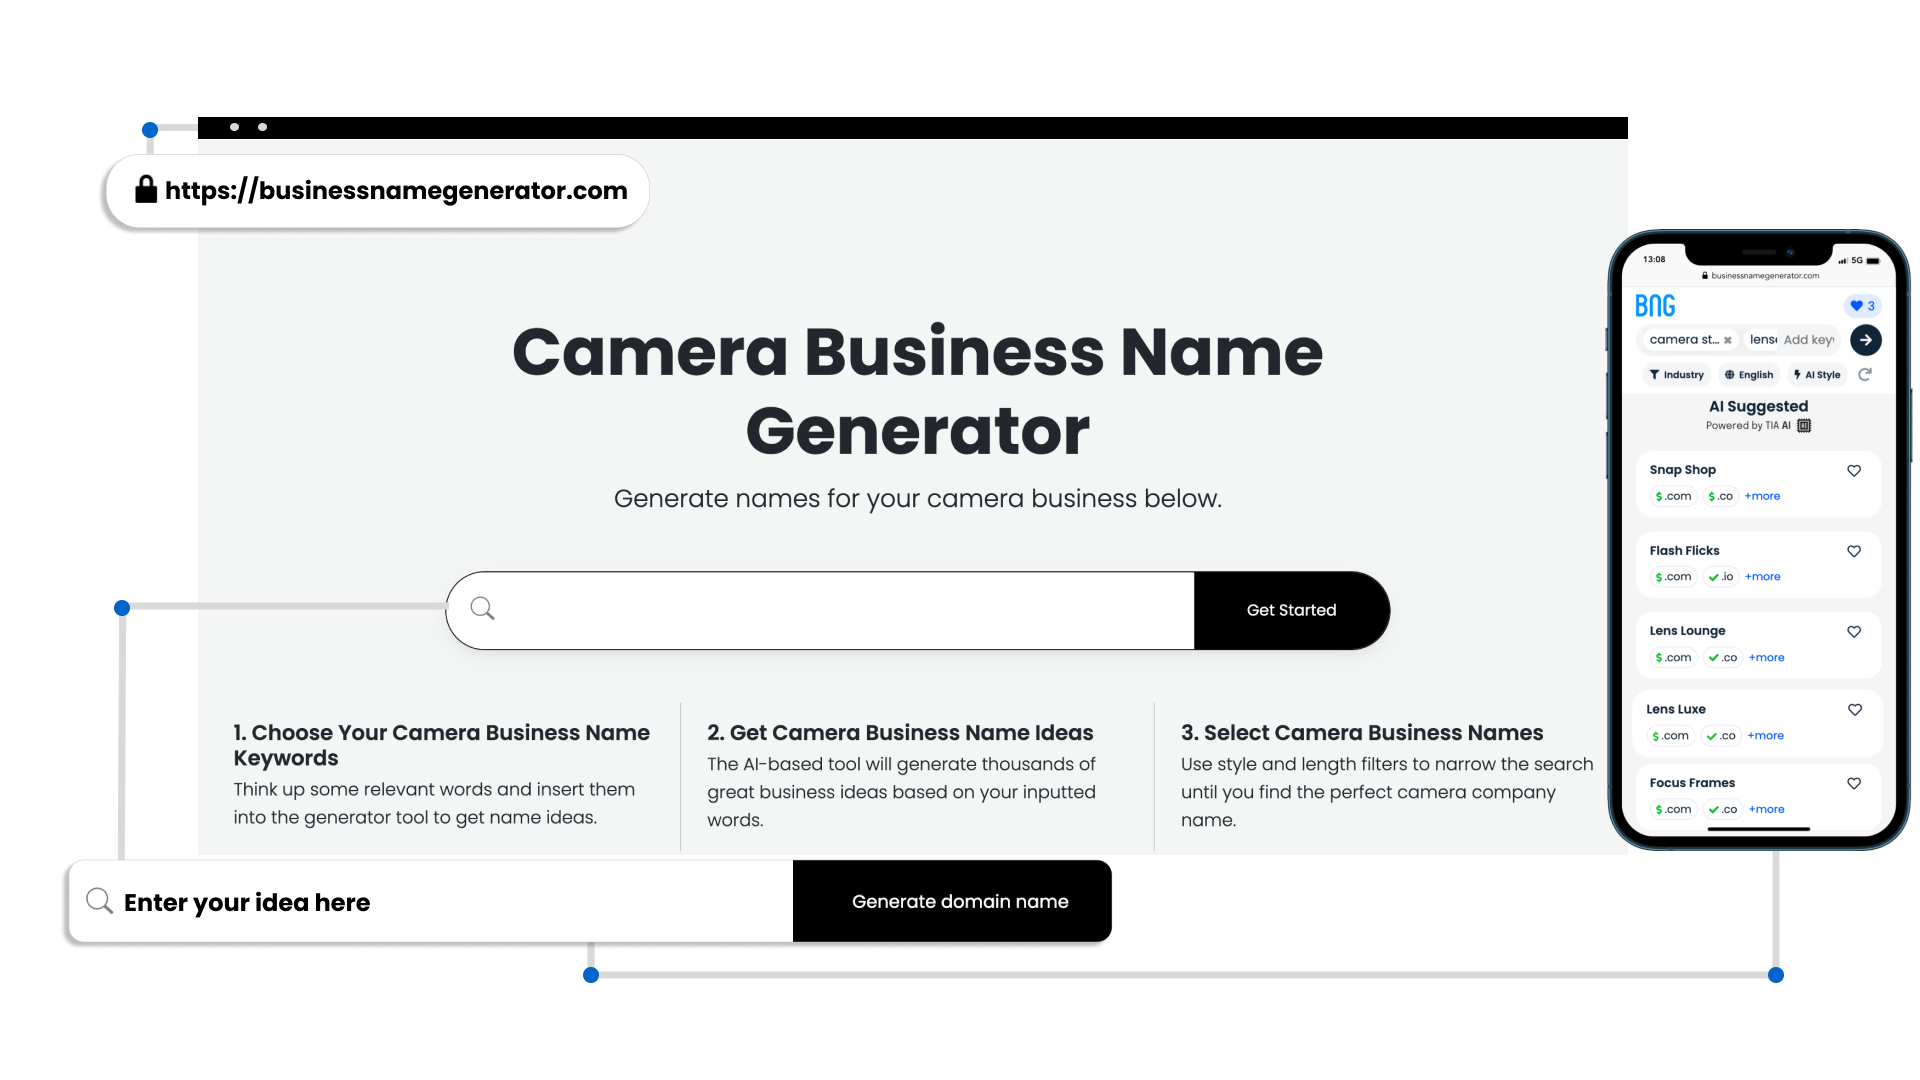 Camera Business Name Generator Functionality